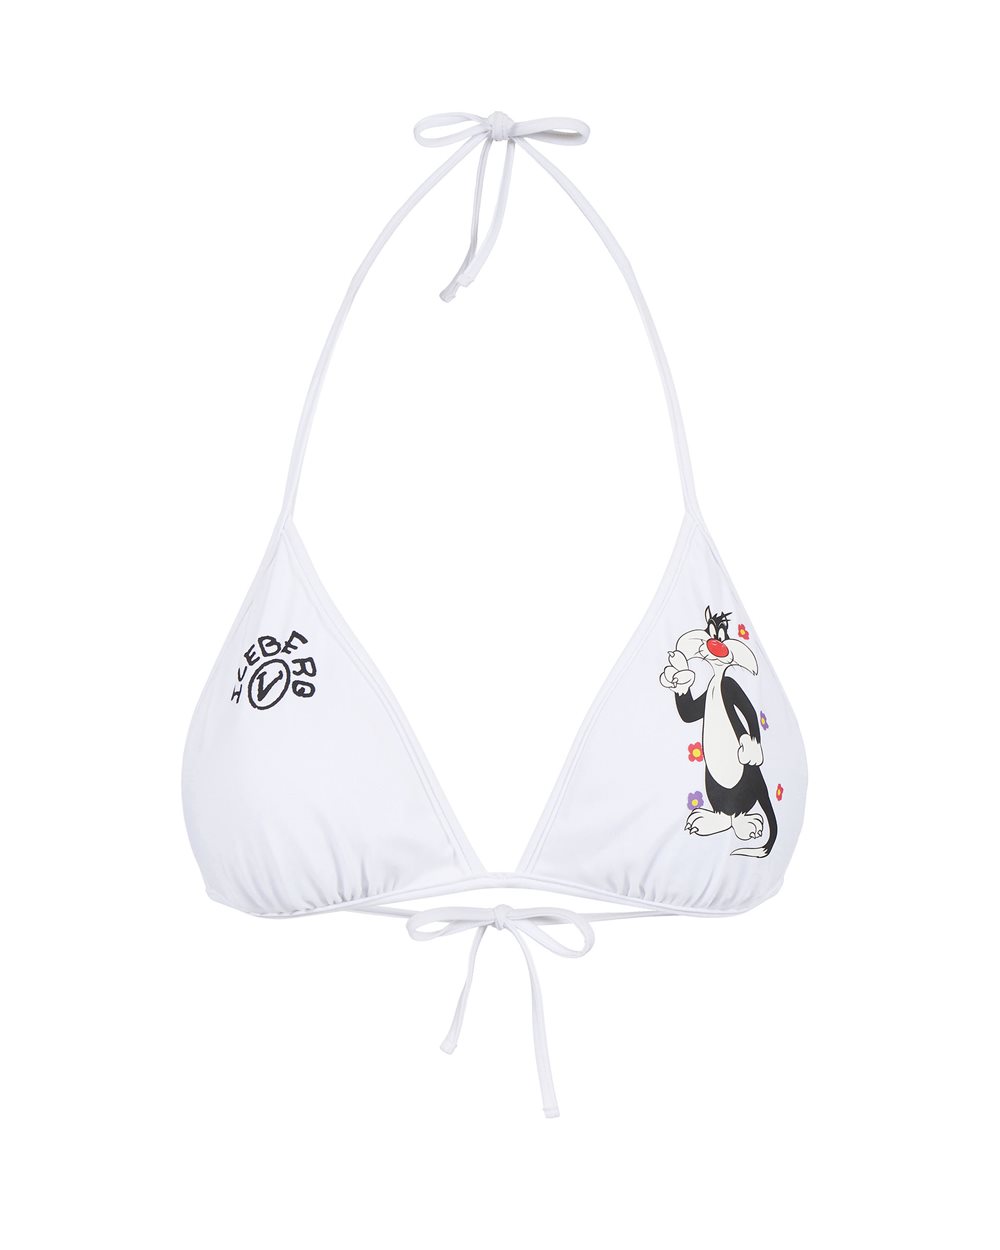 Swim top with logo and cartoon graphics - Beachwear | Iceberg - Official Website